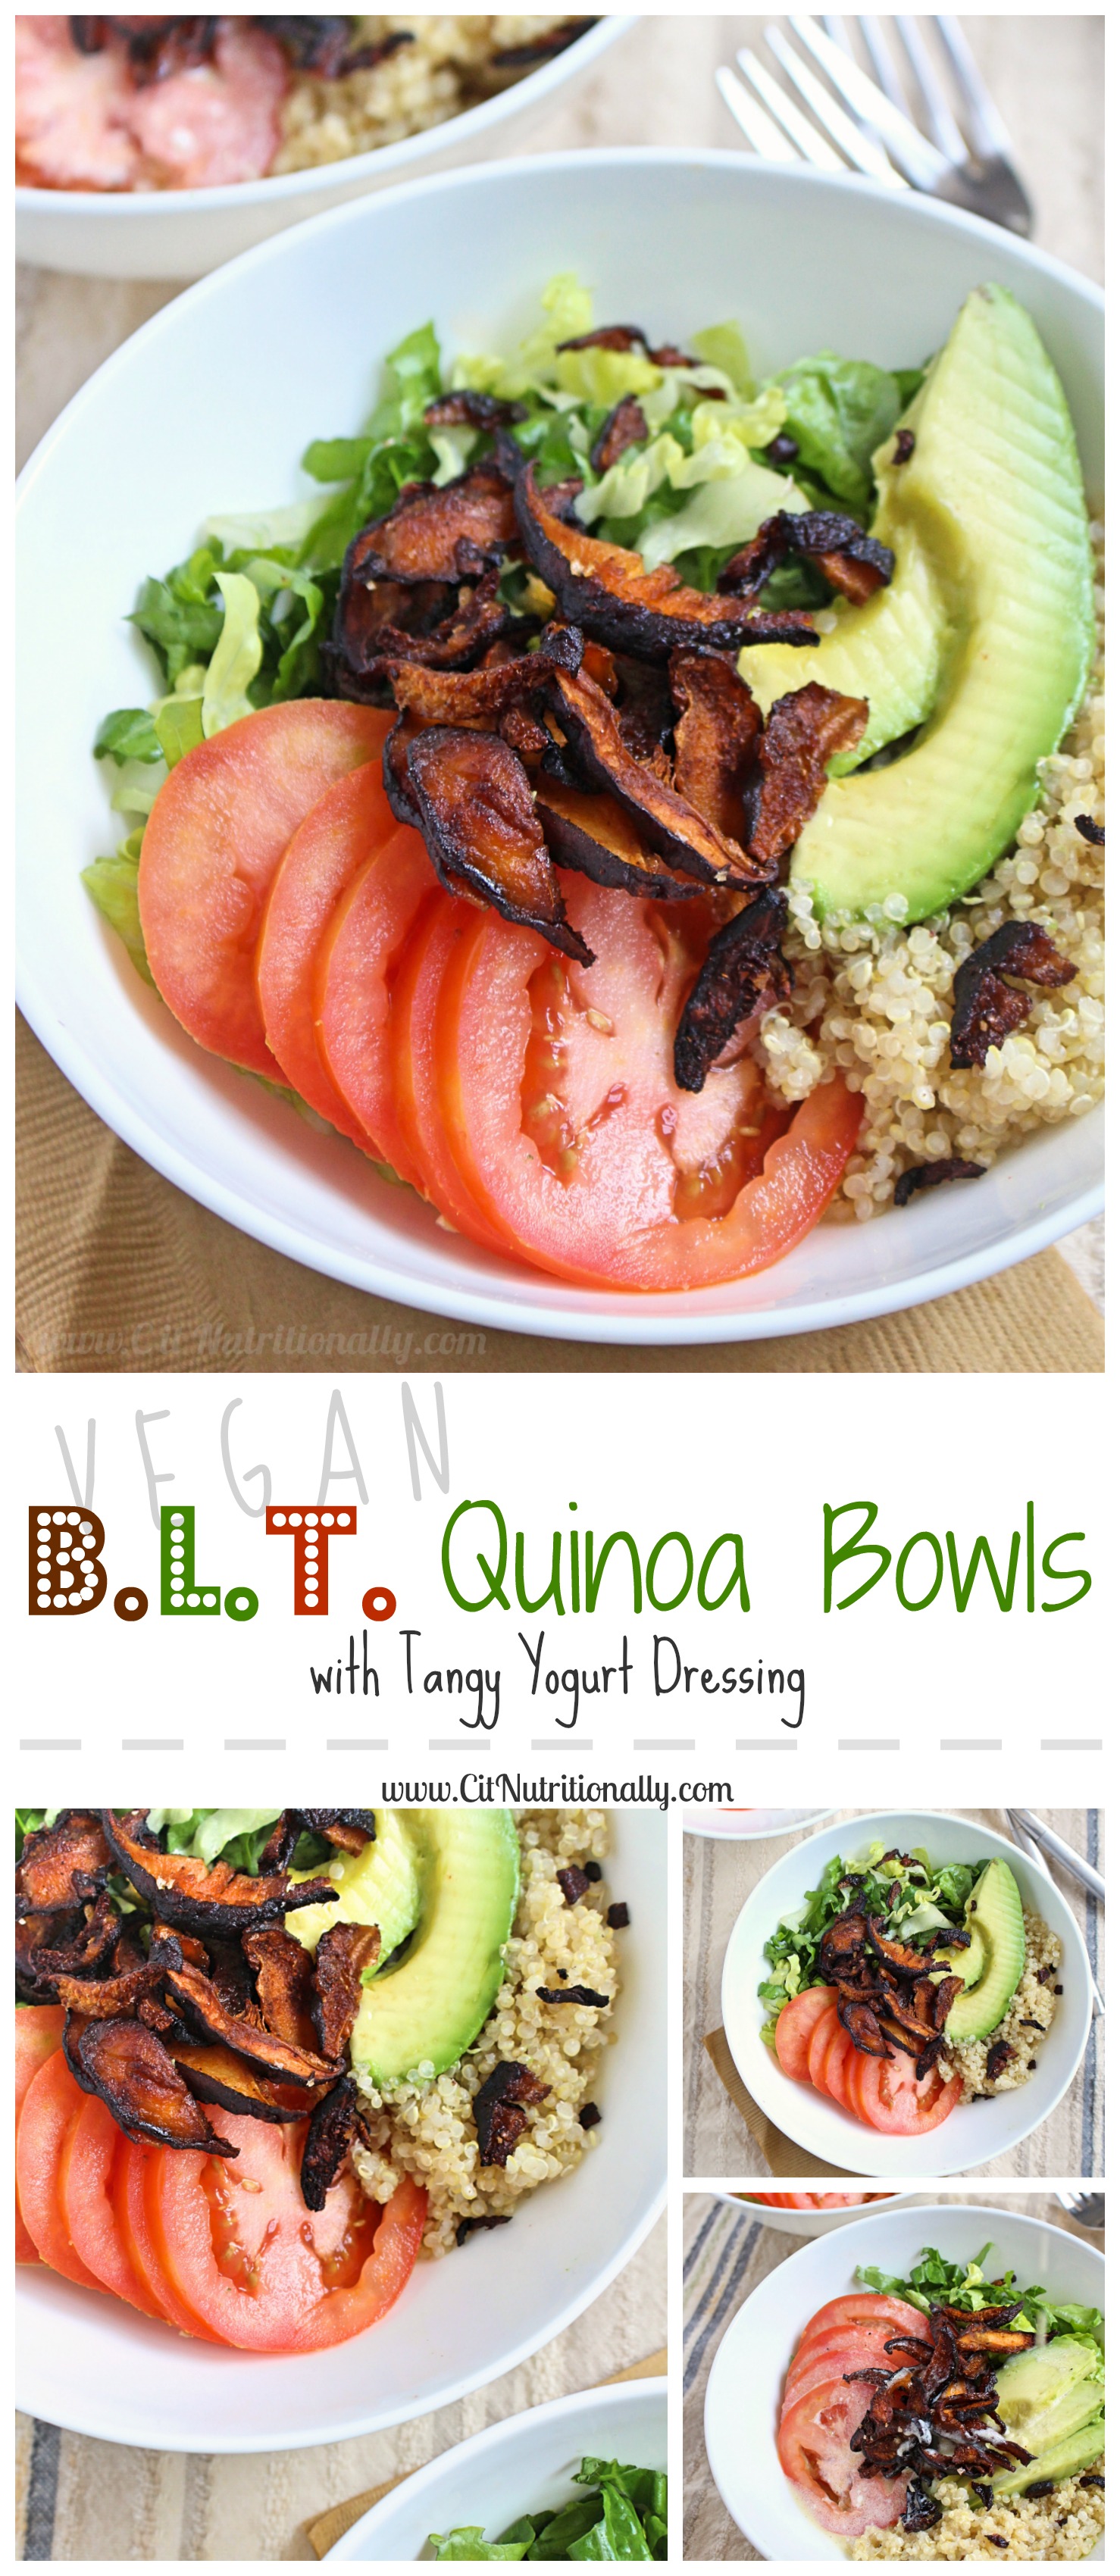 Vegan BLT Quinoa Bowls with Tangy Yogurt Dressing | C it Nutritionally